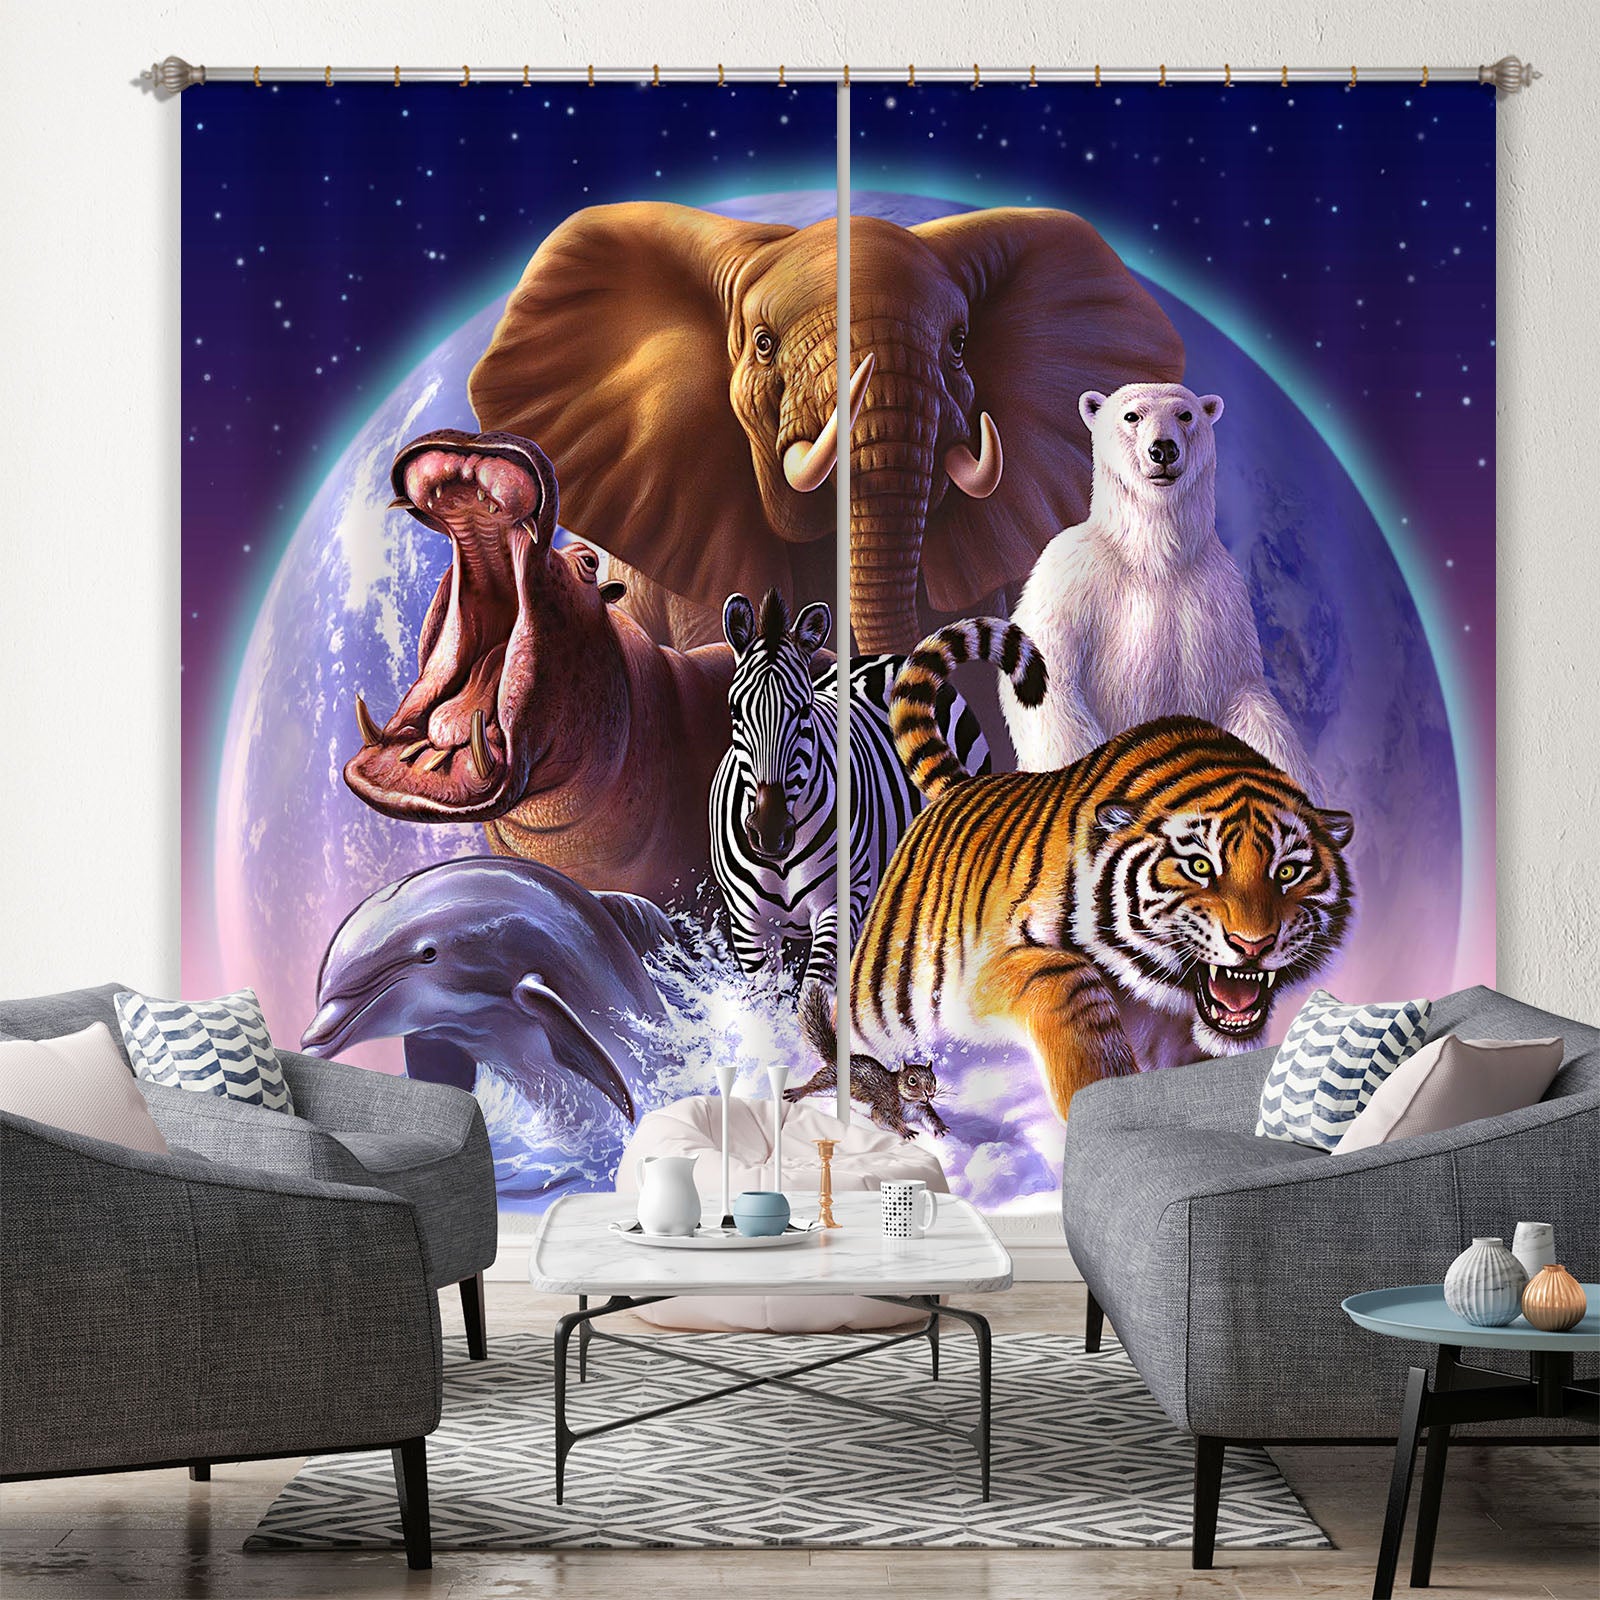 3D Wild World 049 Jerry LoFaro Curtain Curtains Drapes